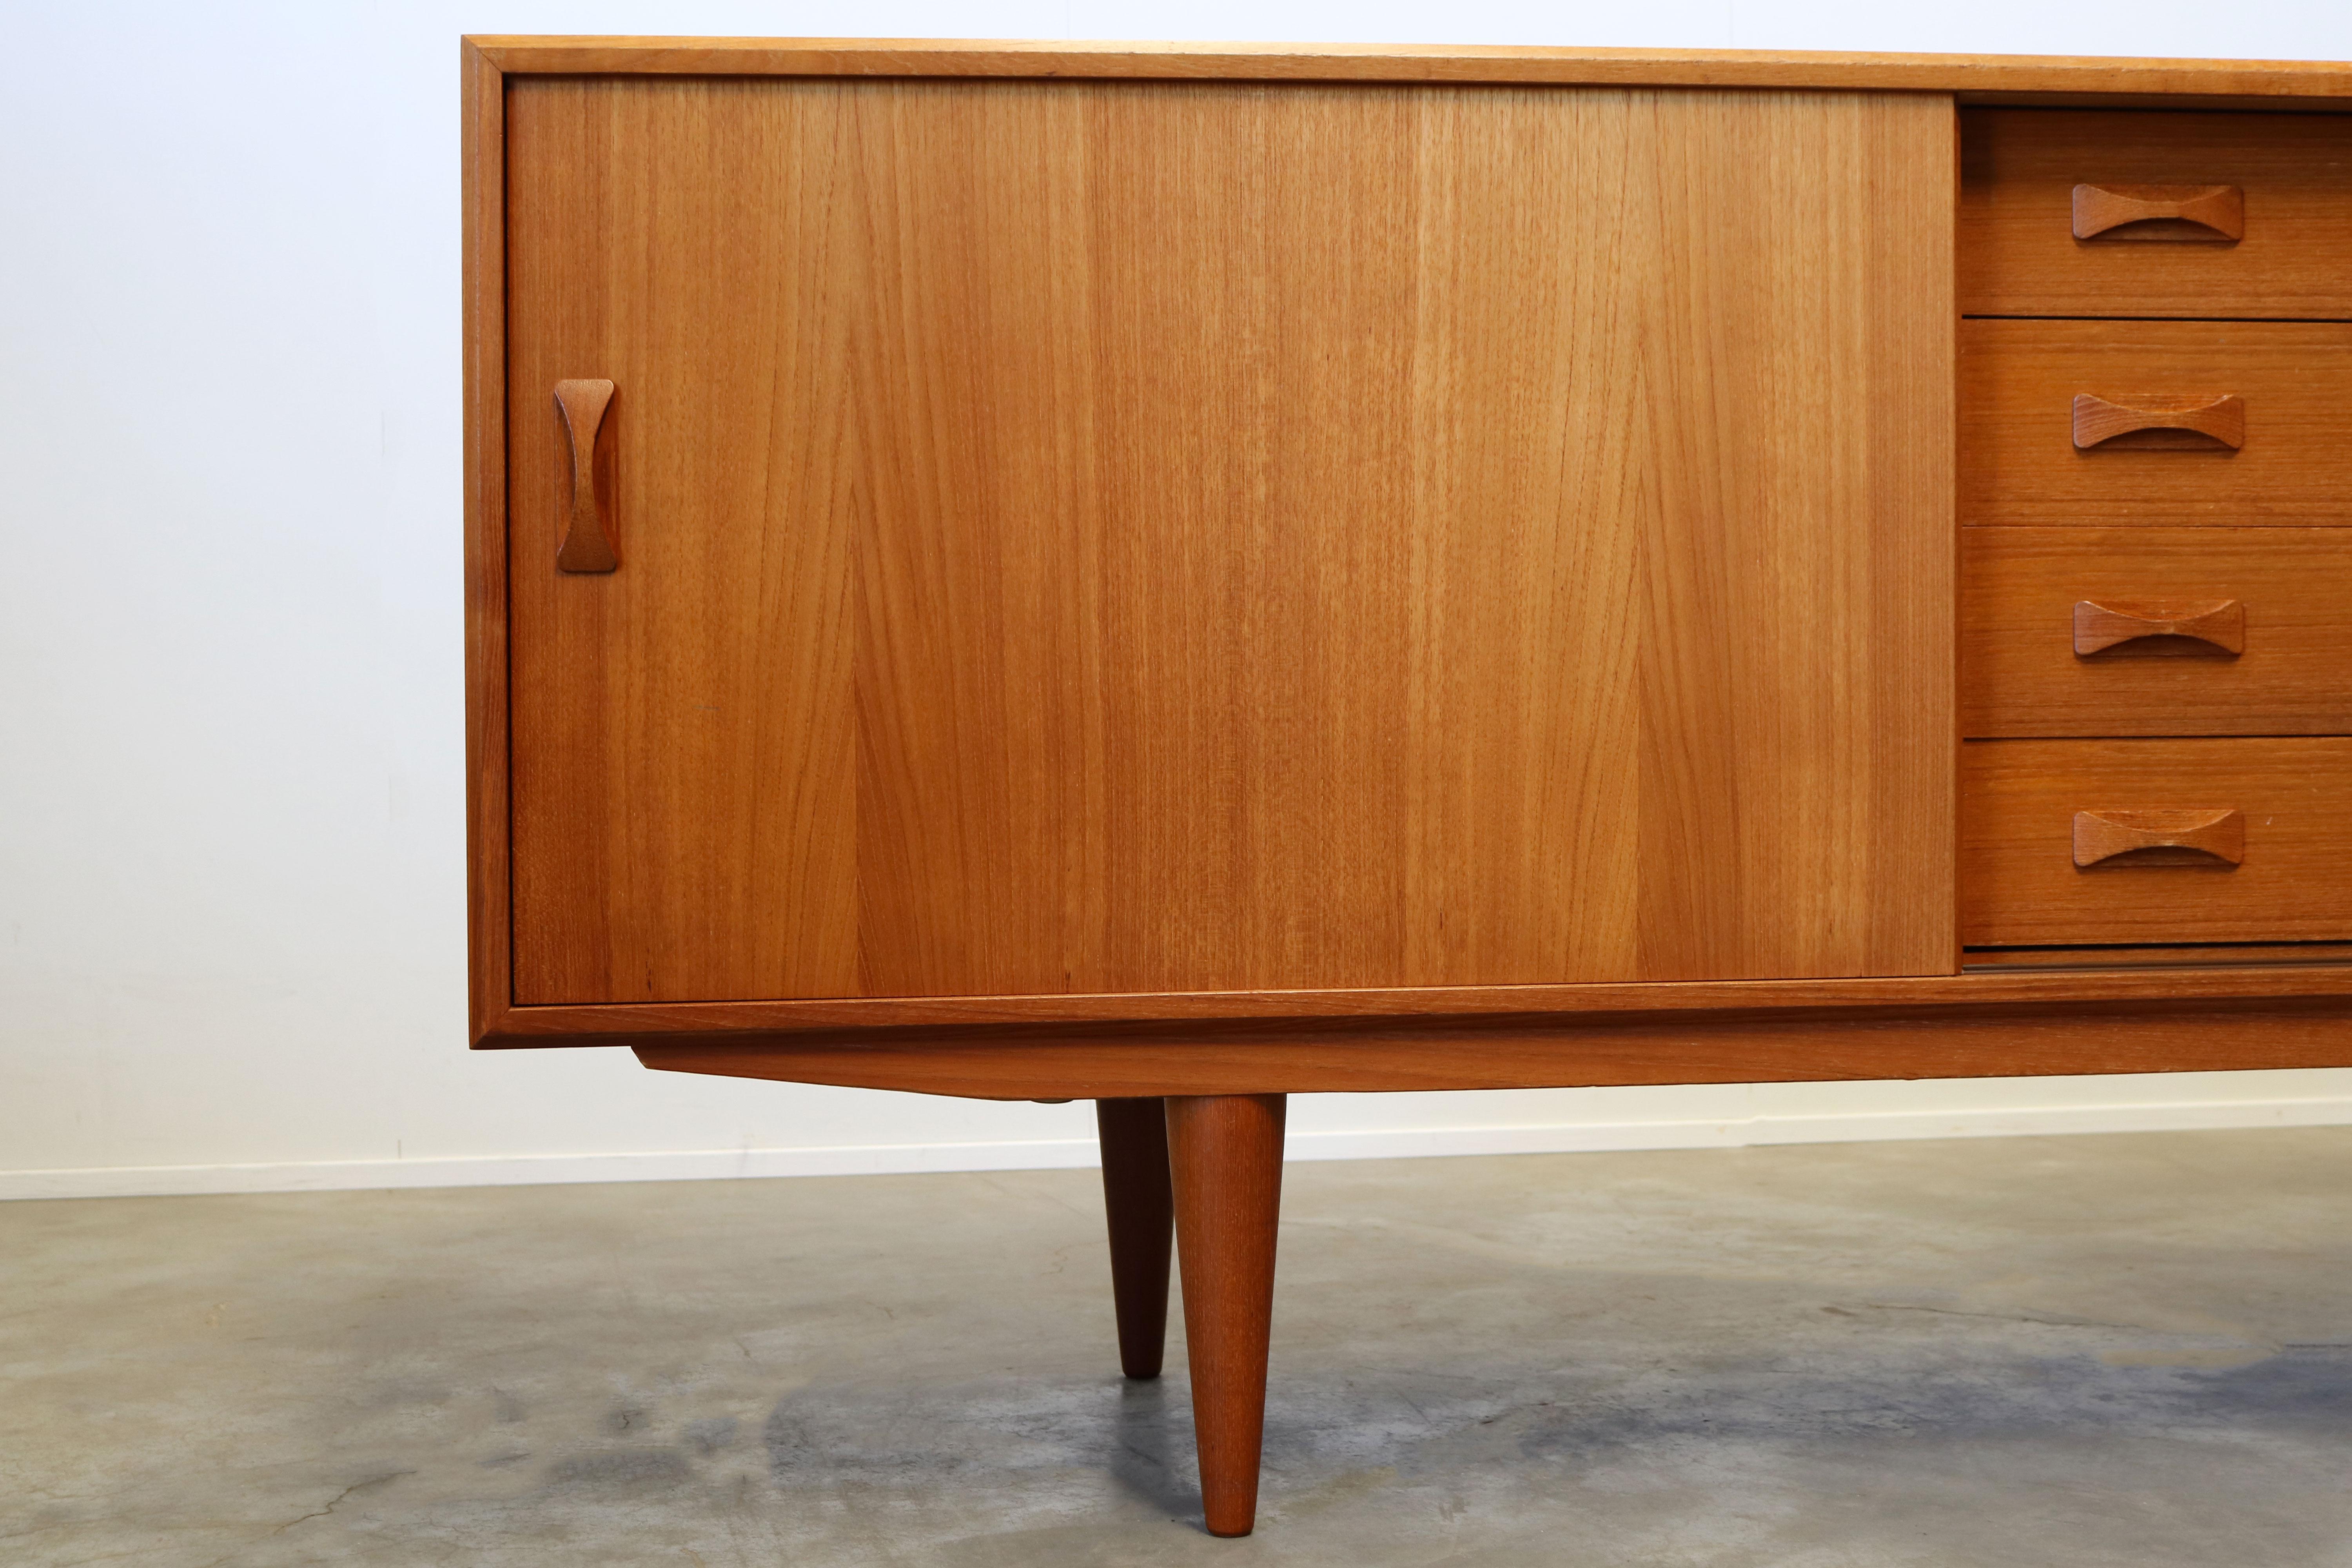 Mid-20th Century Vintage Danish Design Credenza / Sideboard by Clausen & Son 1950s Teak Brown